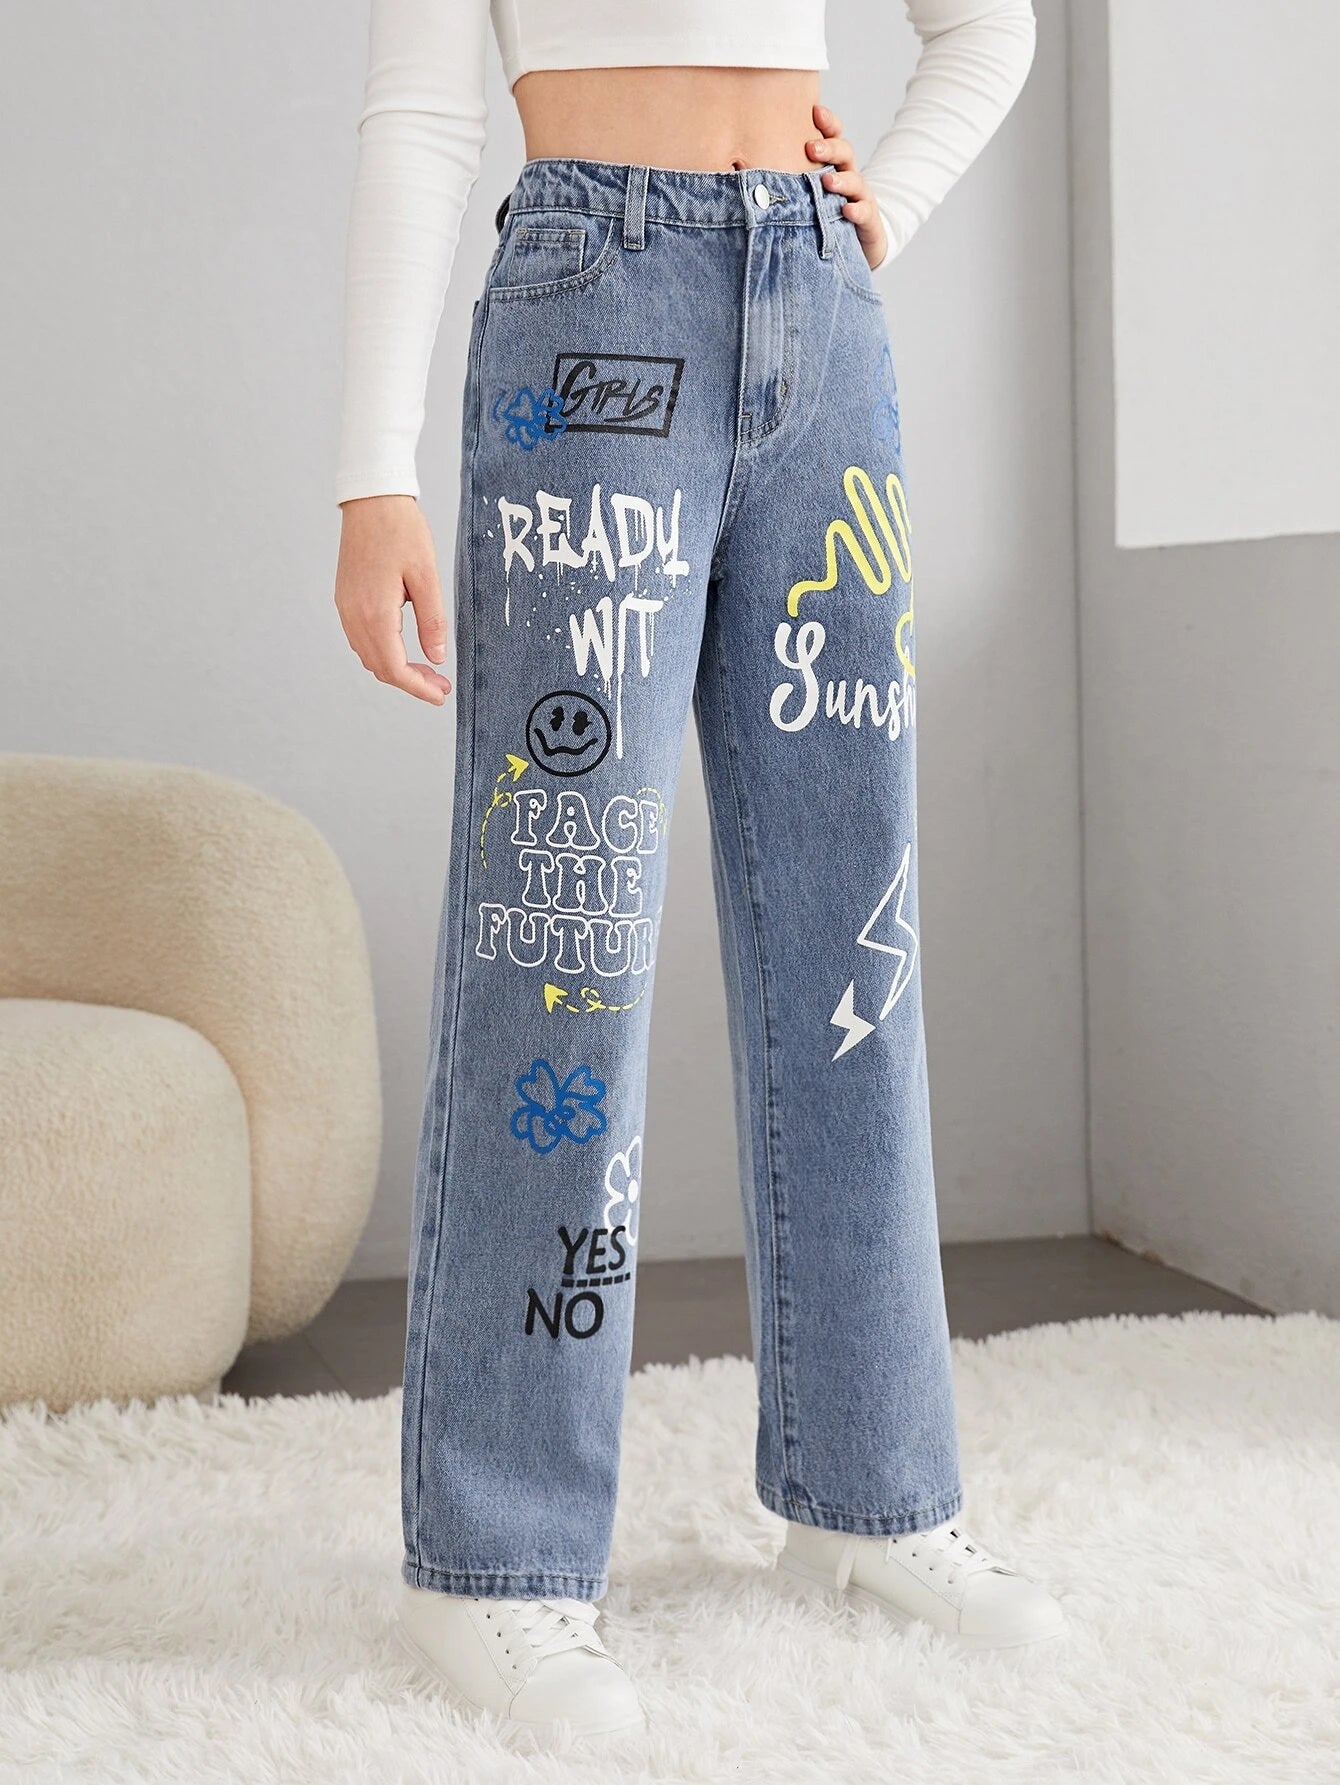 Teen Girls Slogan and Cartoon Graphic Jeans